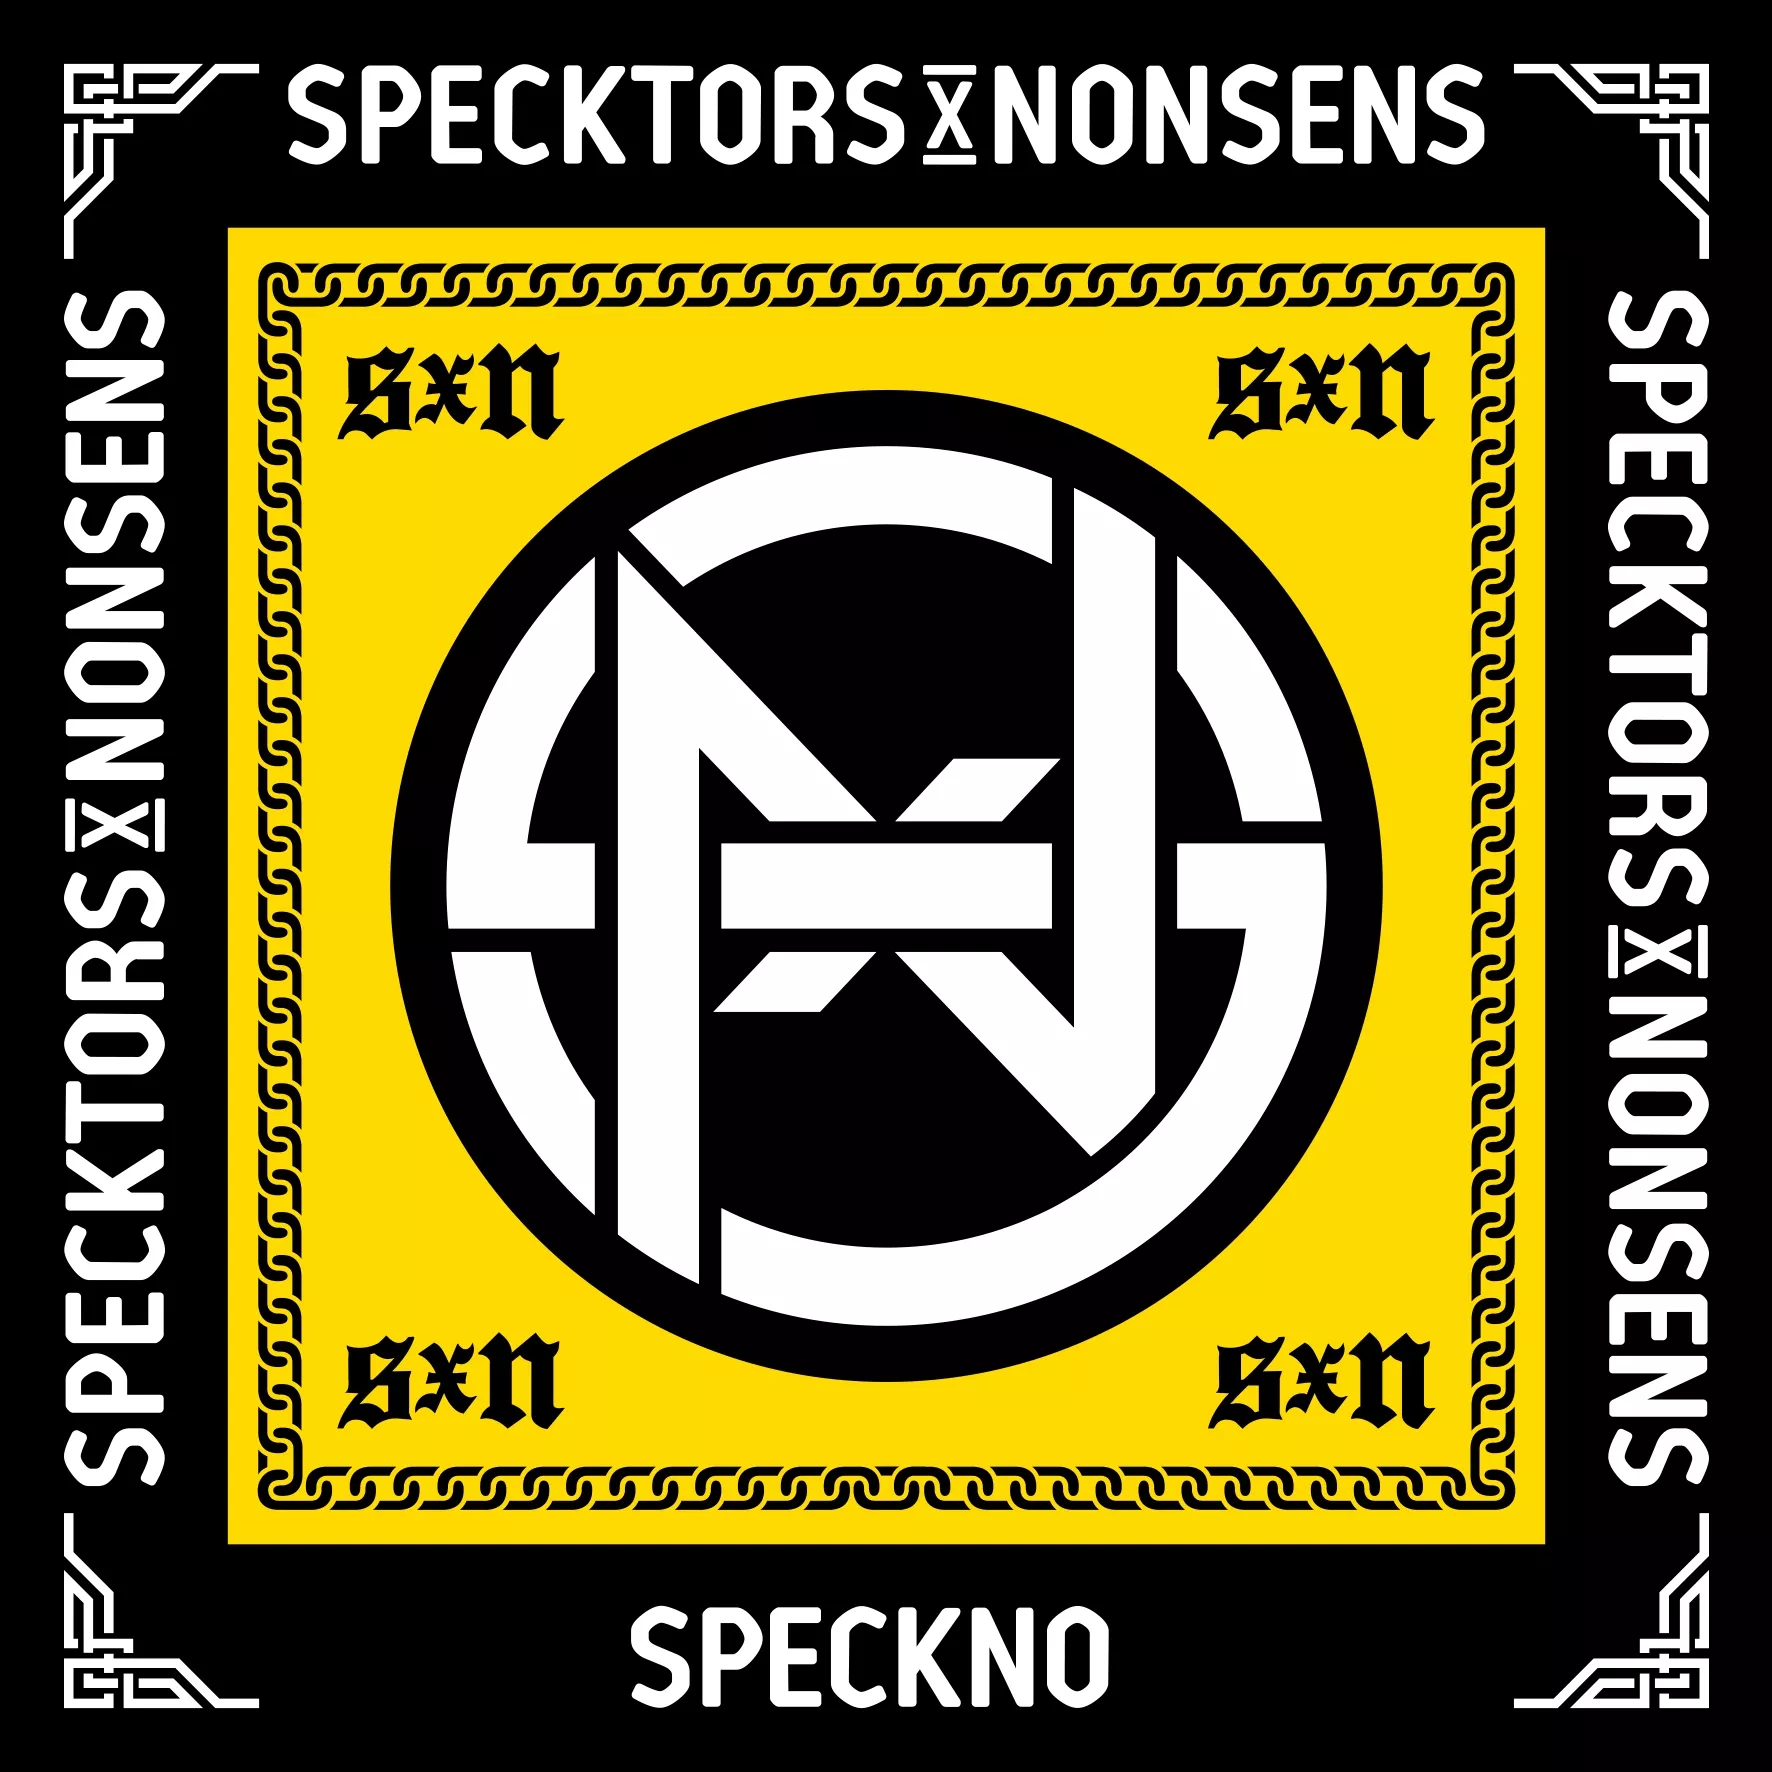 Speckno - Specktors x Nonsens